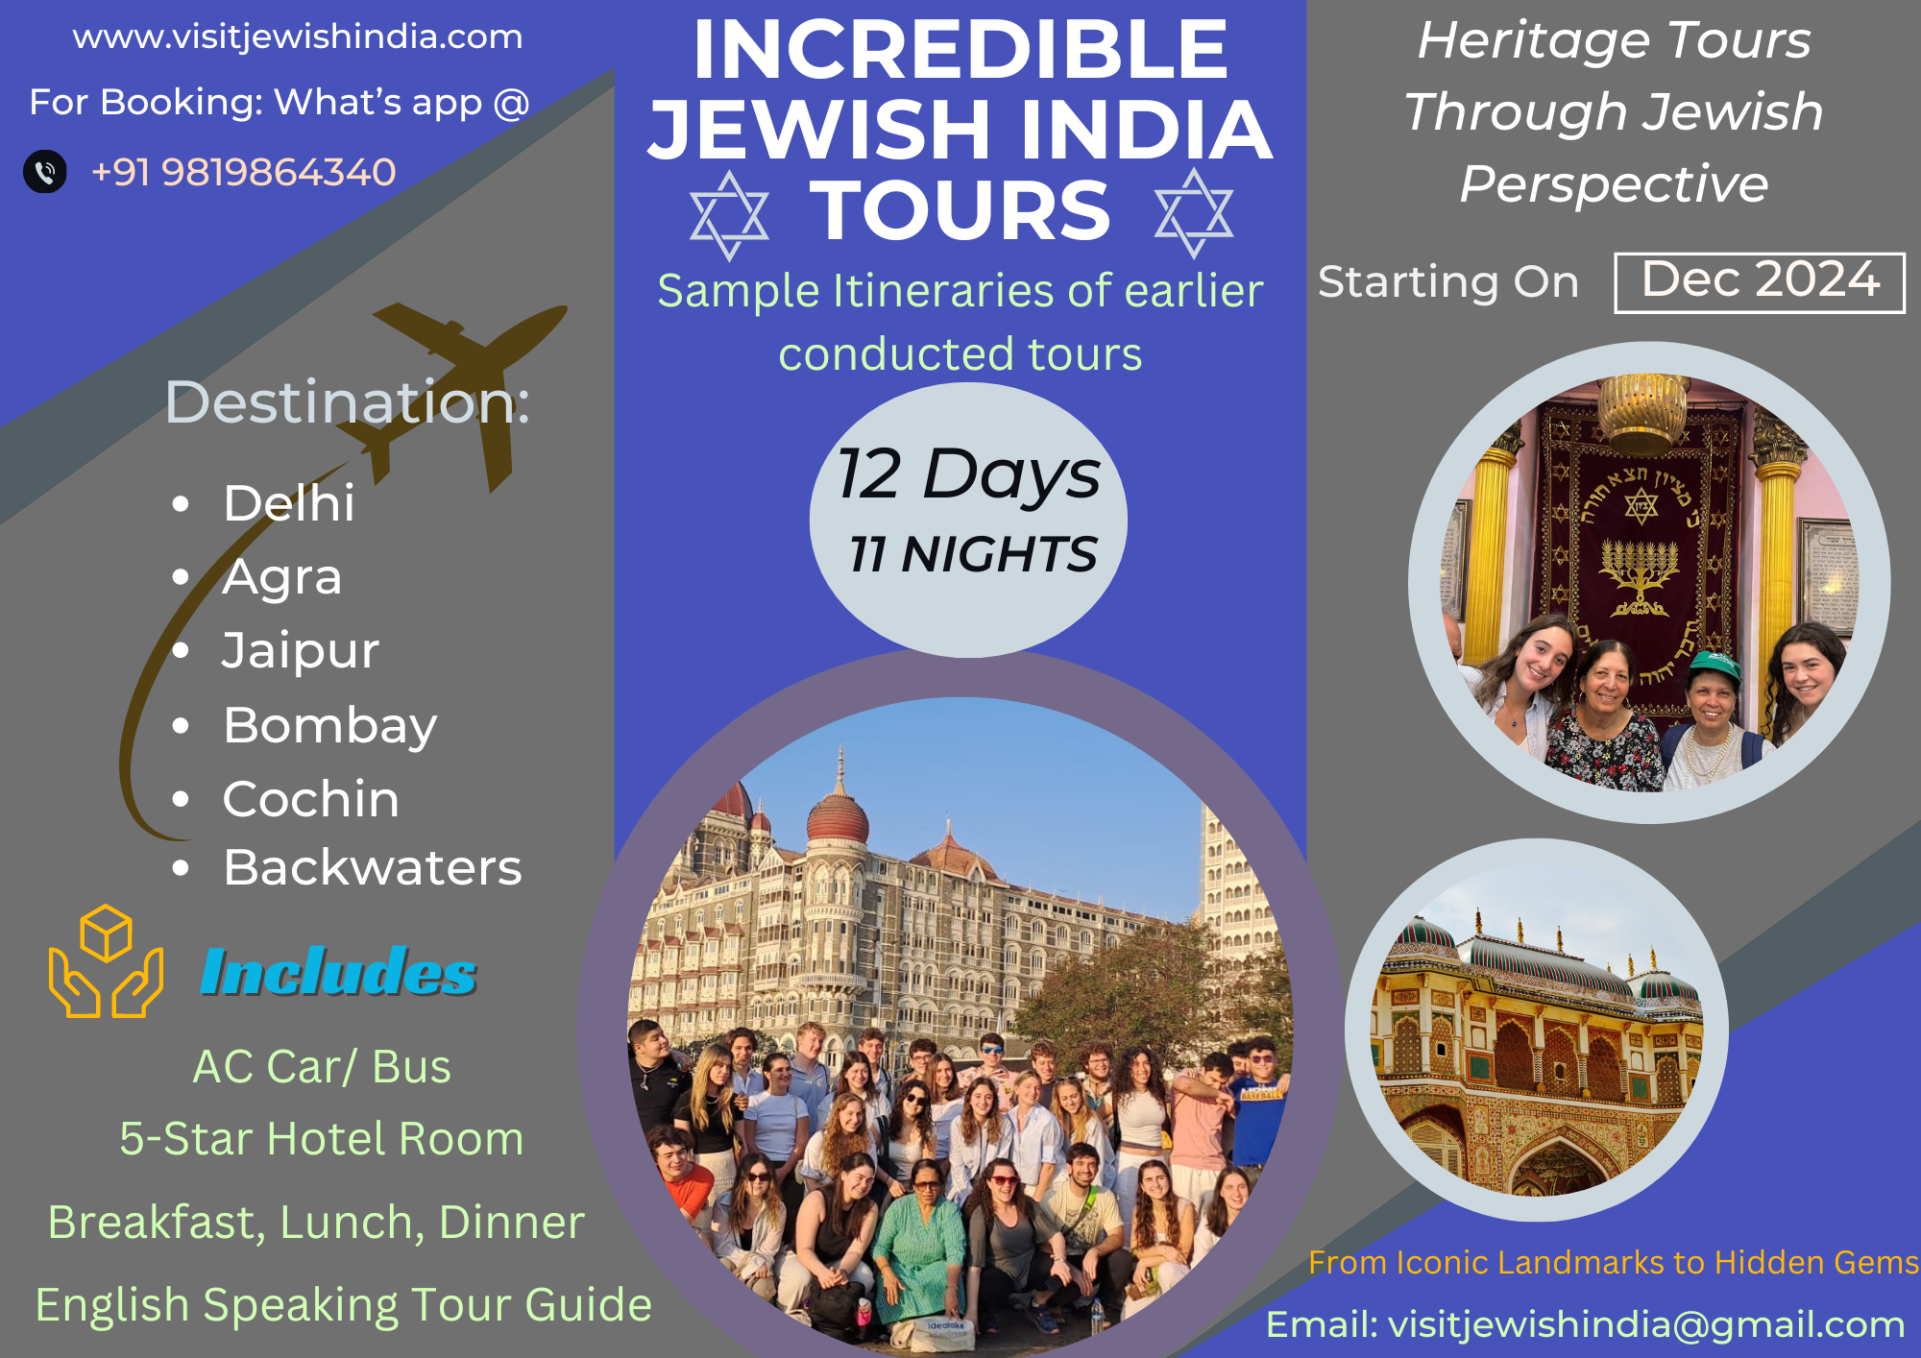 Incredible Jewish India Tours